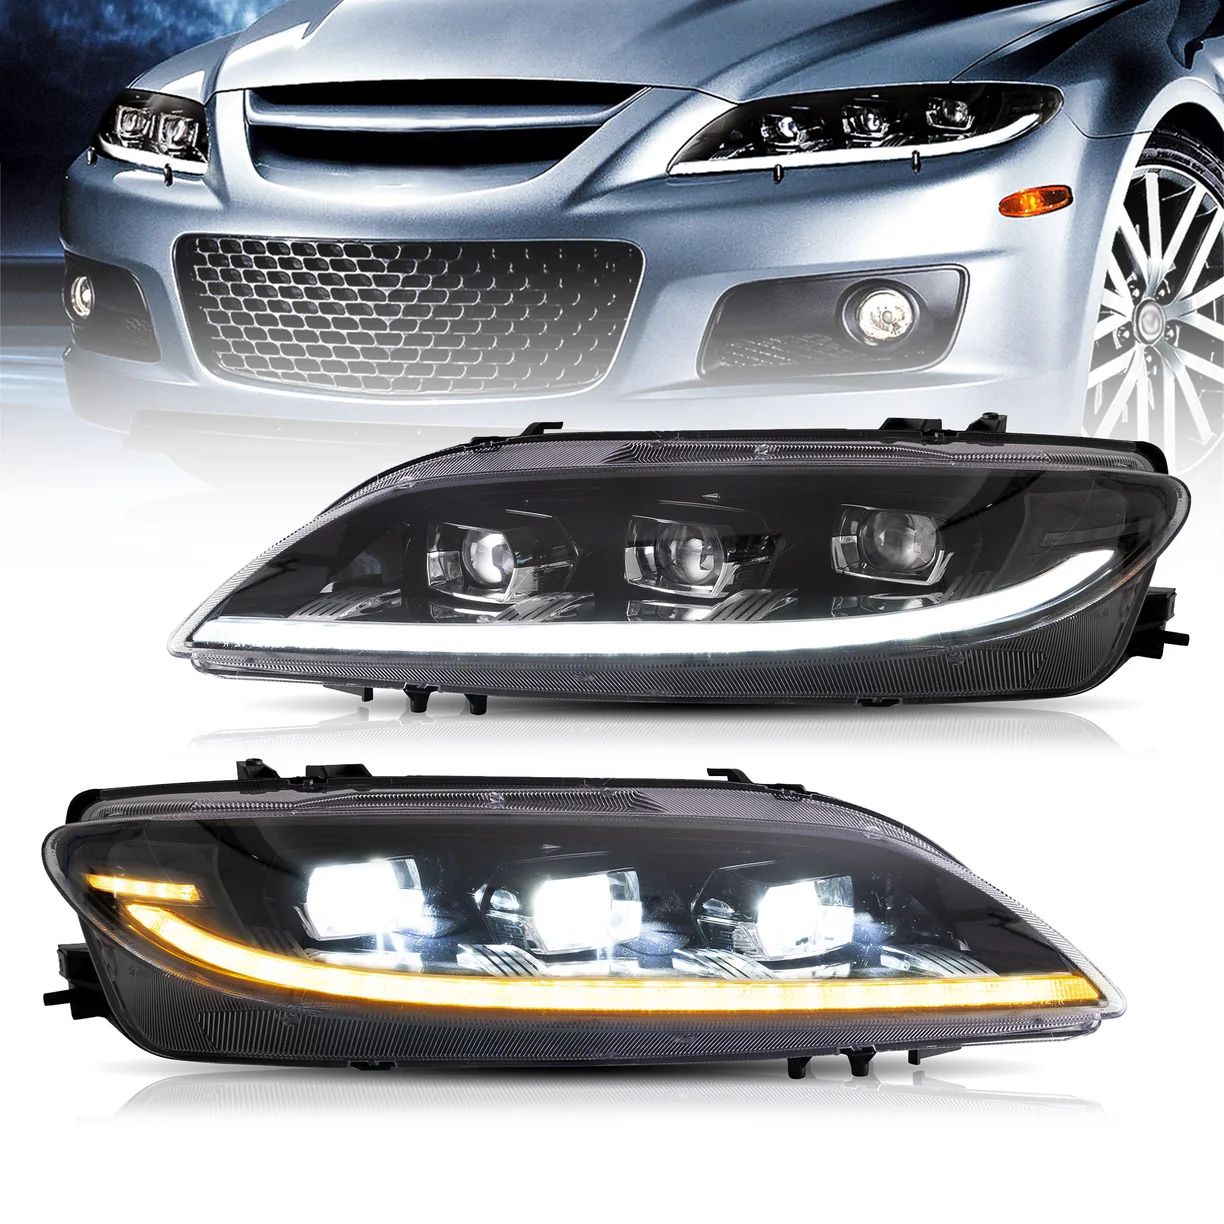  LED Headlights For 2002-2008 Mazda 6 First Gen(GG1) Fit Factory Halogen Models